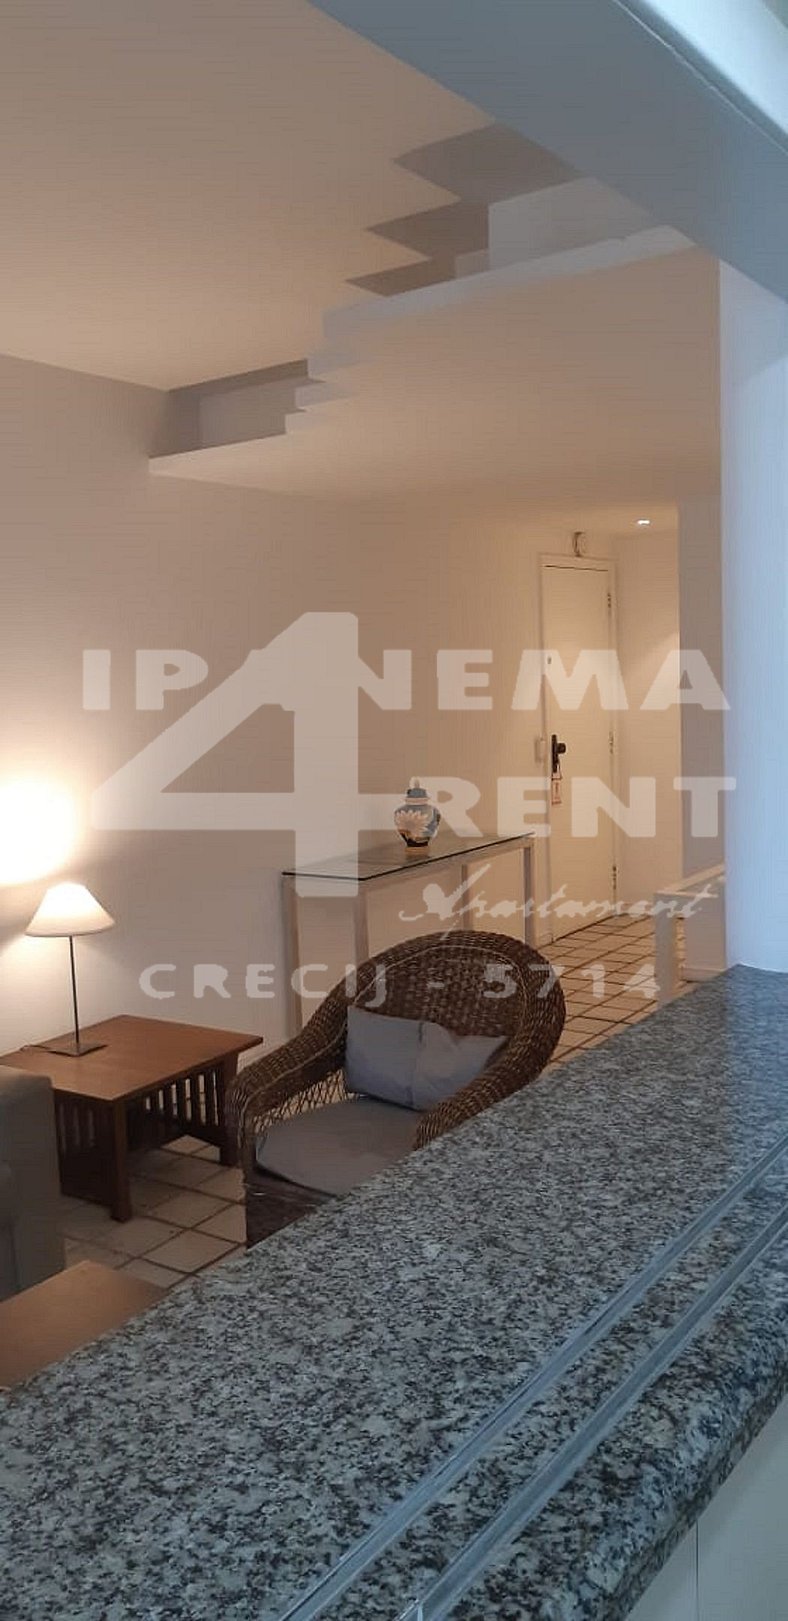 IPF2057 - Ipanema Tower Residence Service - Ipanema